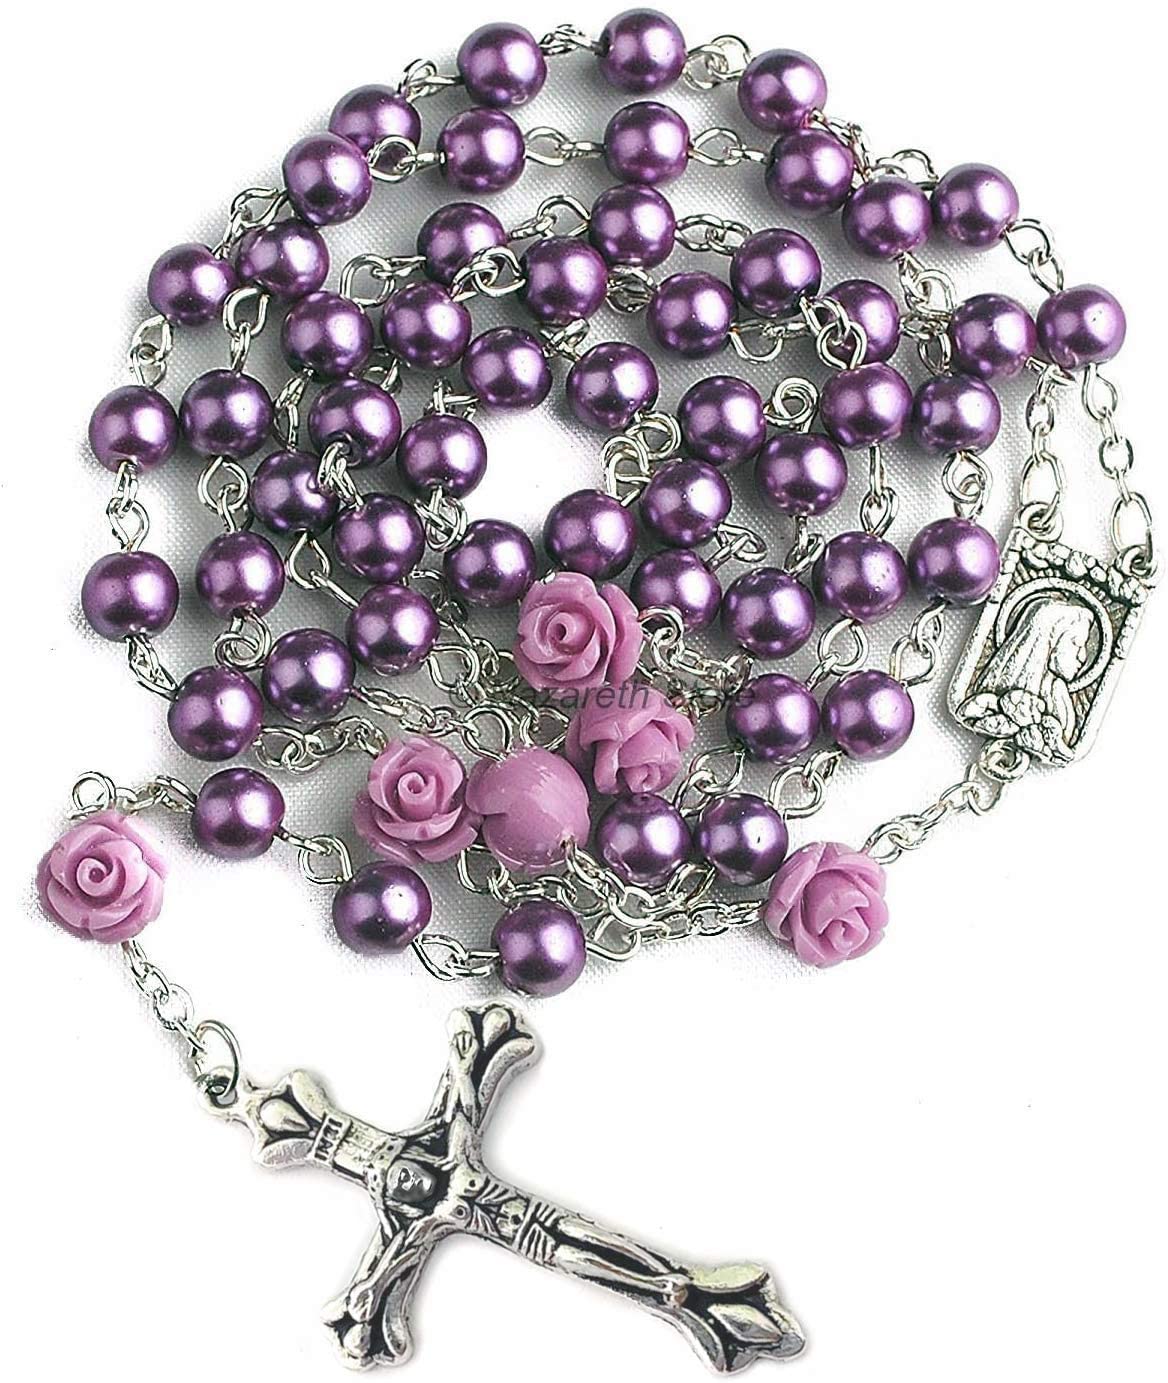 Catholic purple pearl rosary necklace.jpg